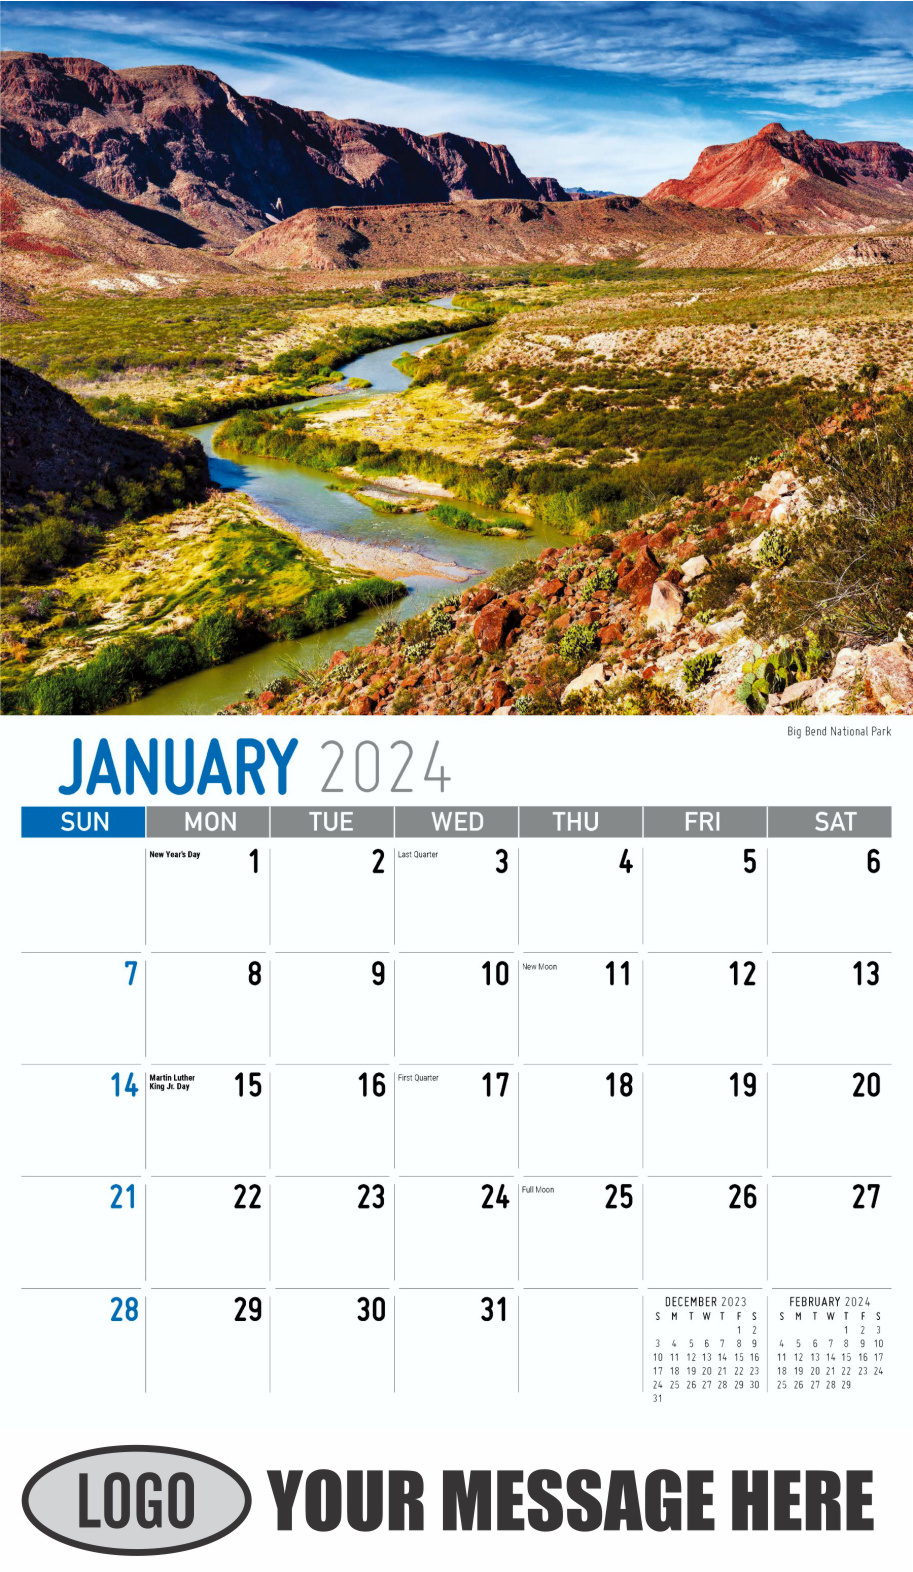 Scenes of Texas 2024 Business Advertising Calendar - January